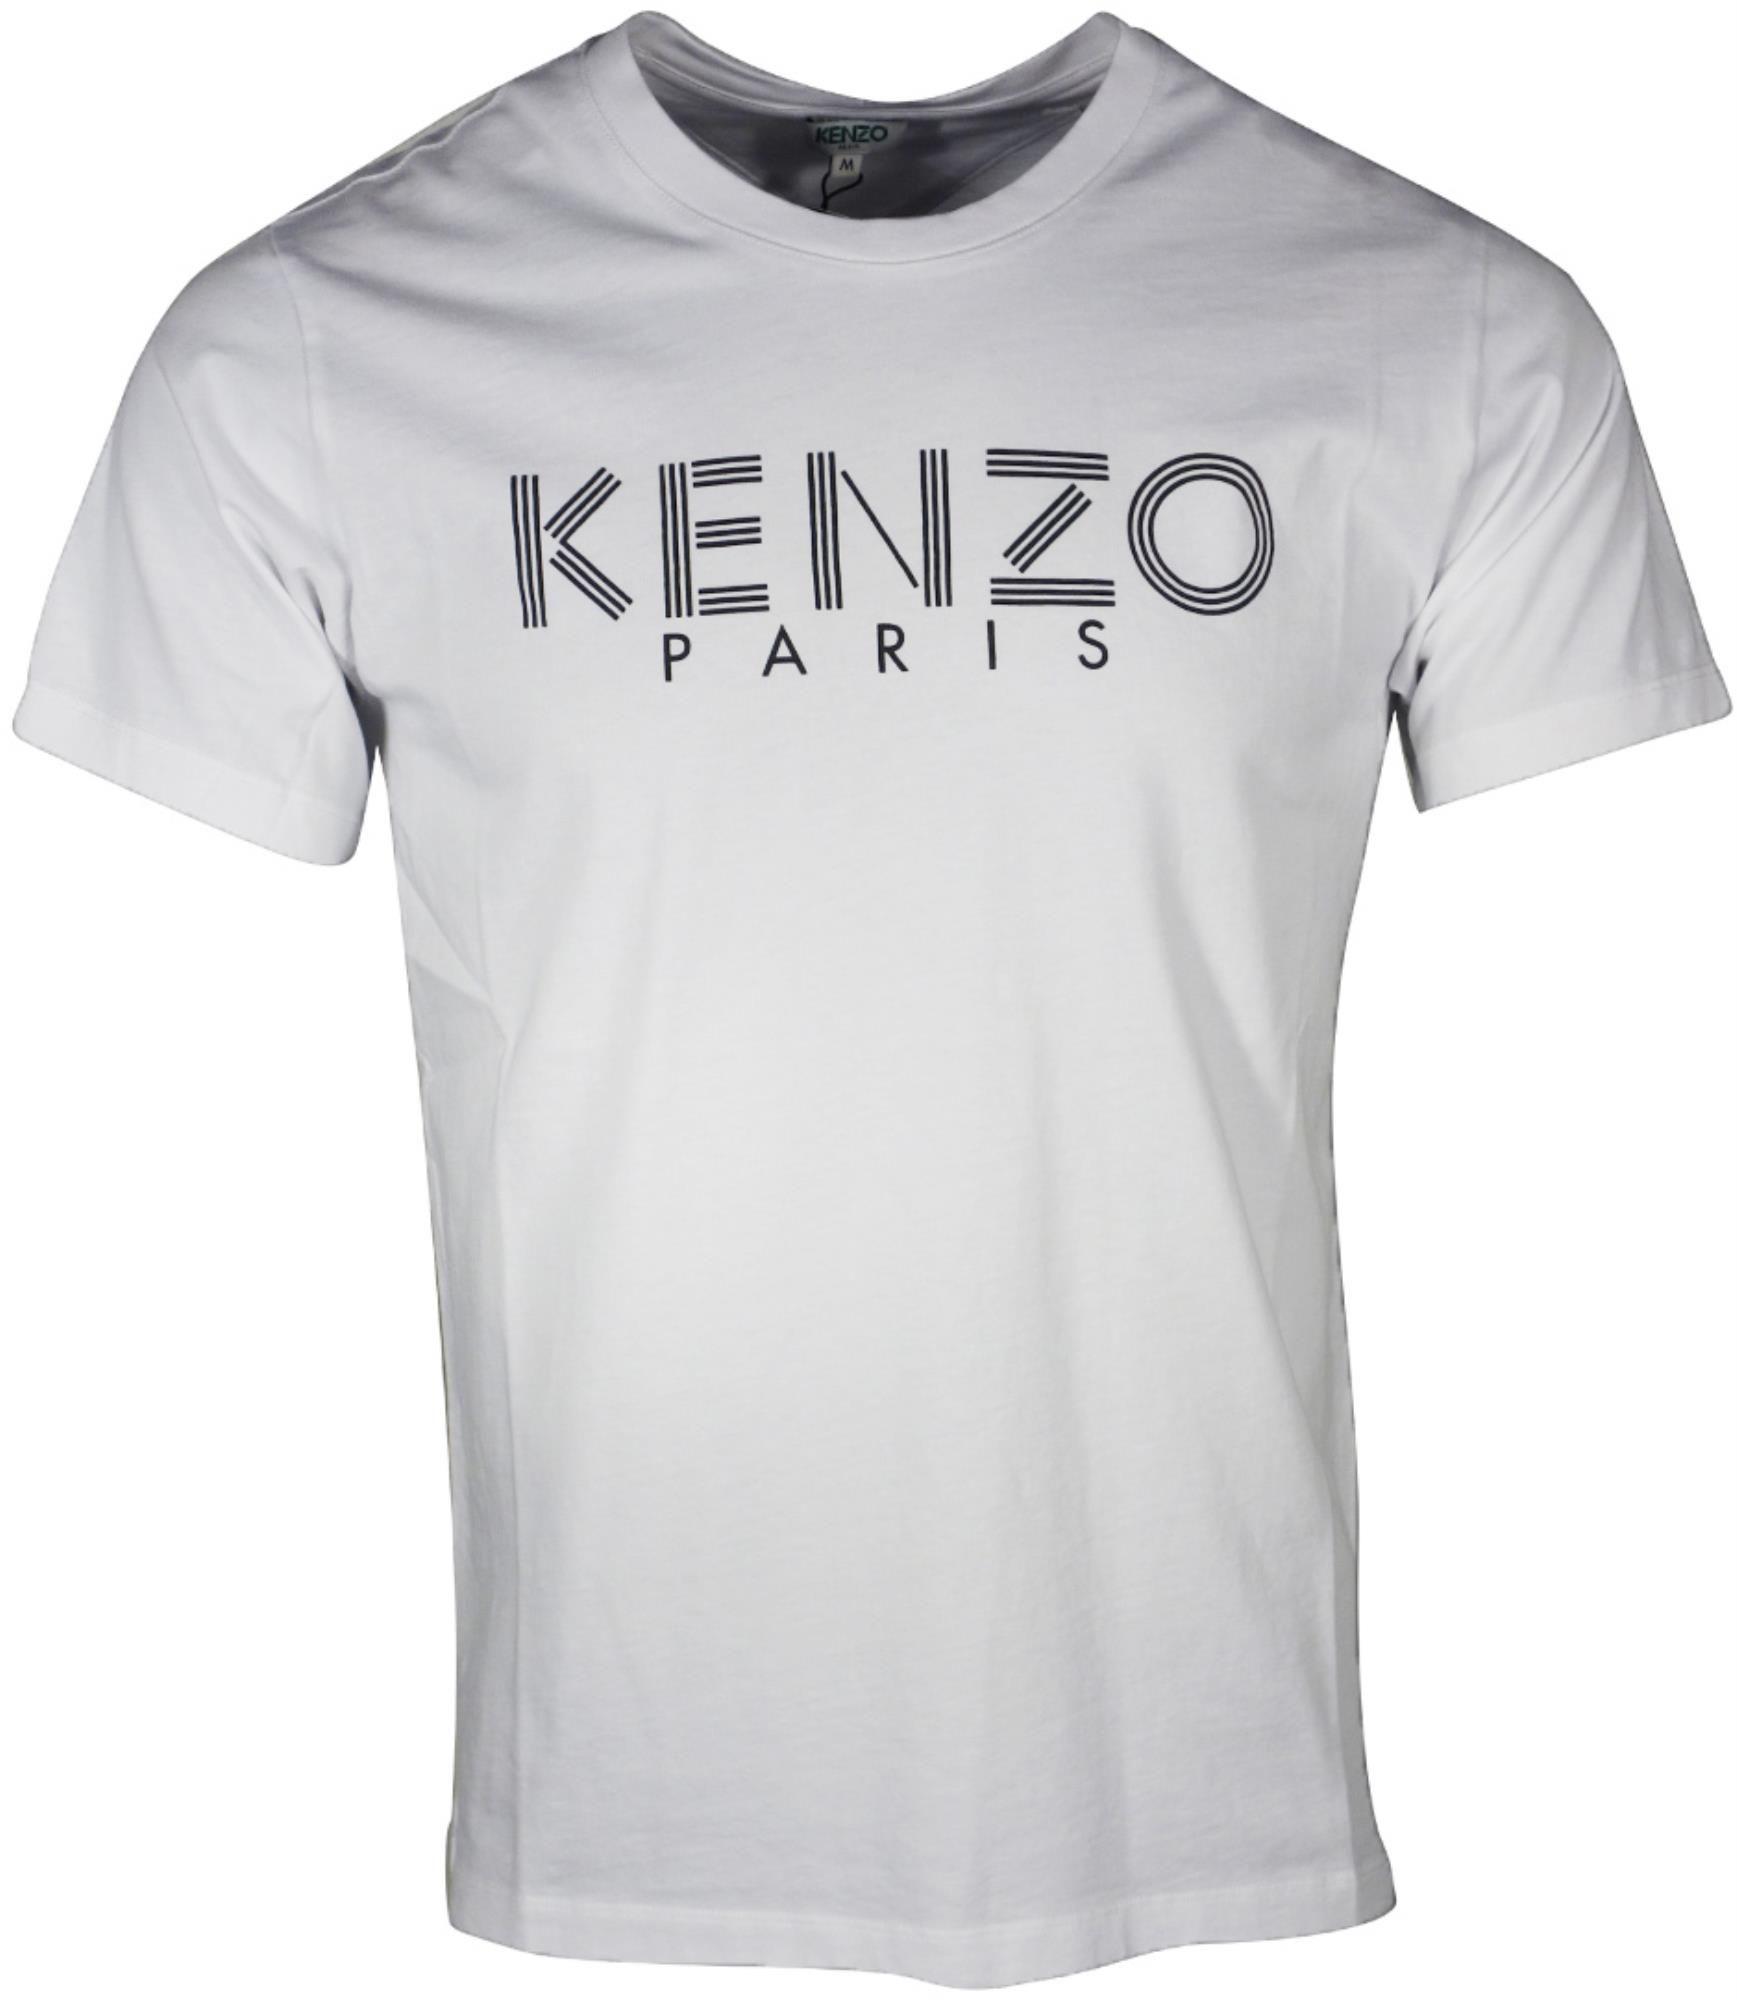 Kenzo Paris Logo - Kenzo T-shirt Kenzo Paris Logo Front